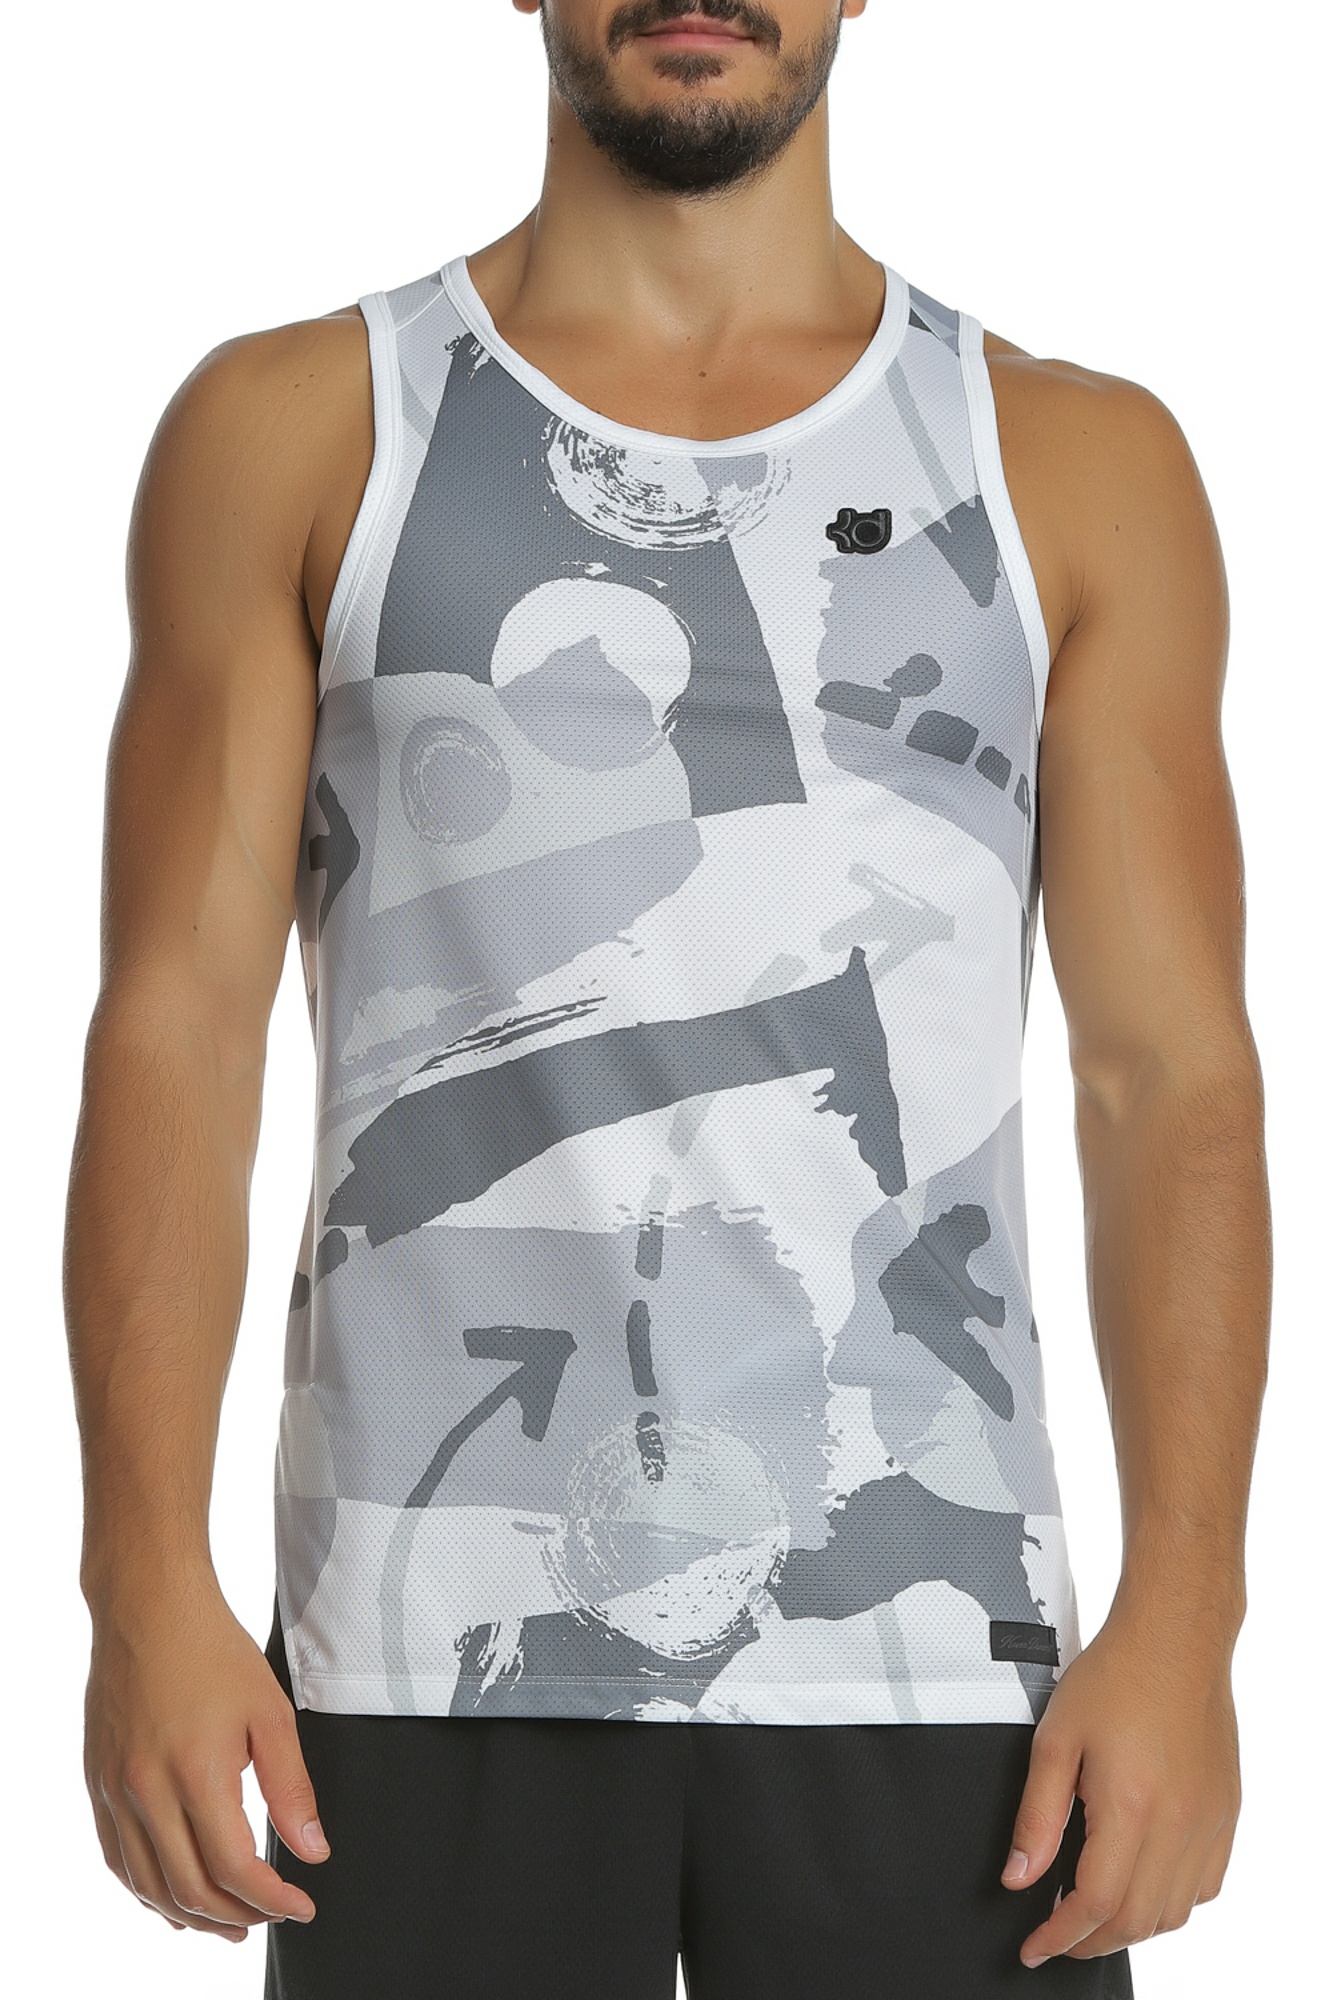 NIKE - Ανδρική μπλούζα KEVIN DURANT HYPERELITE γκρι Ανδρικά/Ρούχα/Αθλητικά/T-shirt